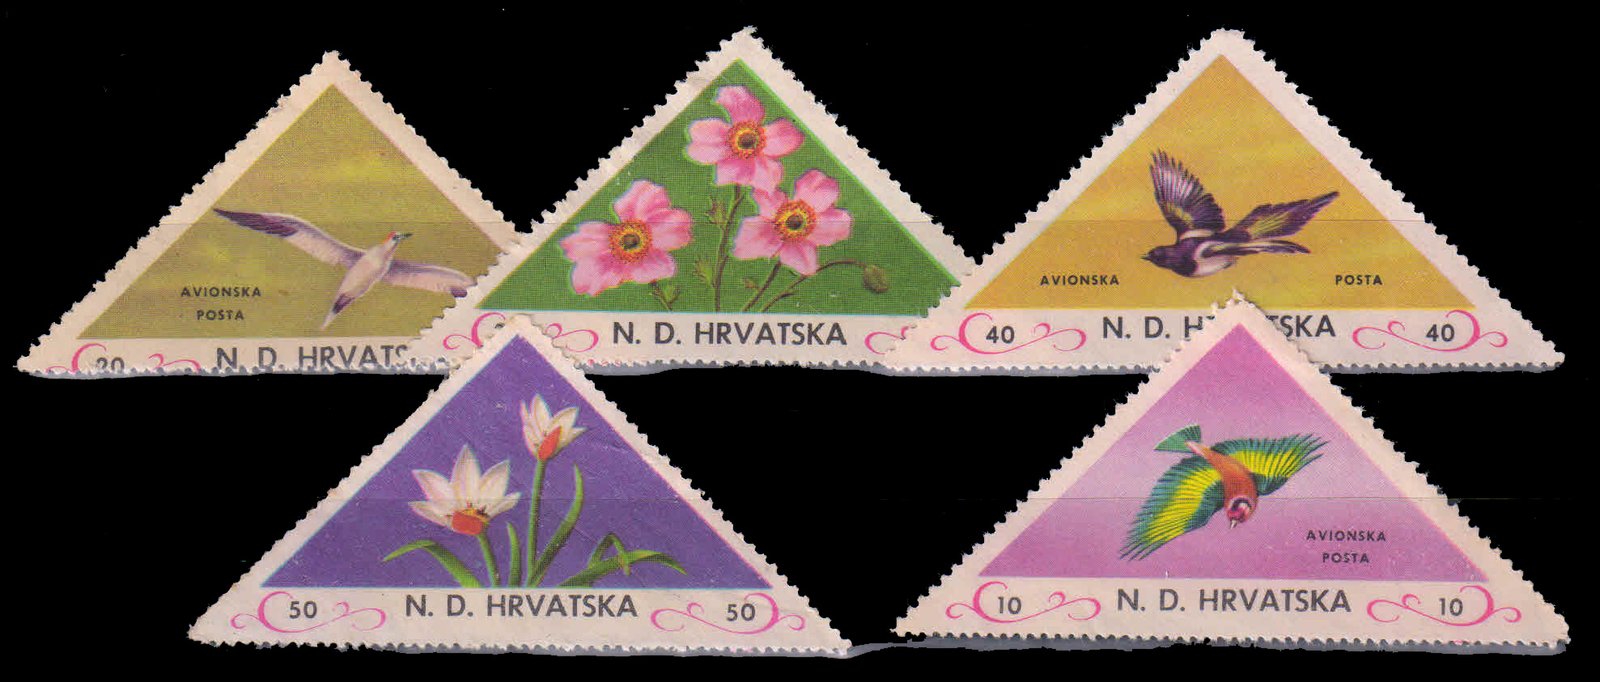 HRVATSKA-CROTIA-5 Different Triangular Shaped-Flora & Fauna-Mint & Used-Local Issues